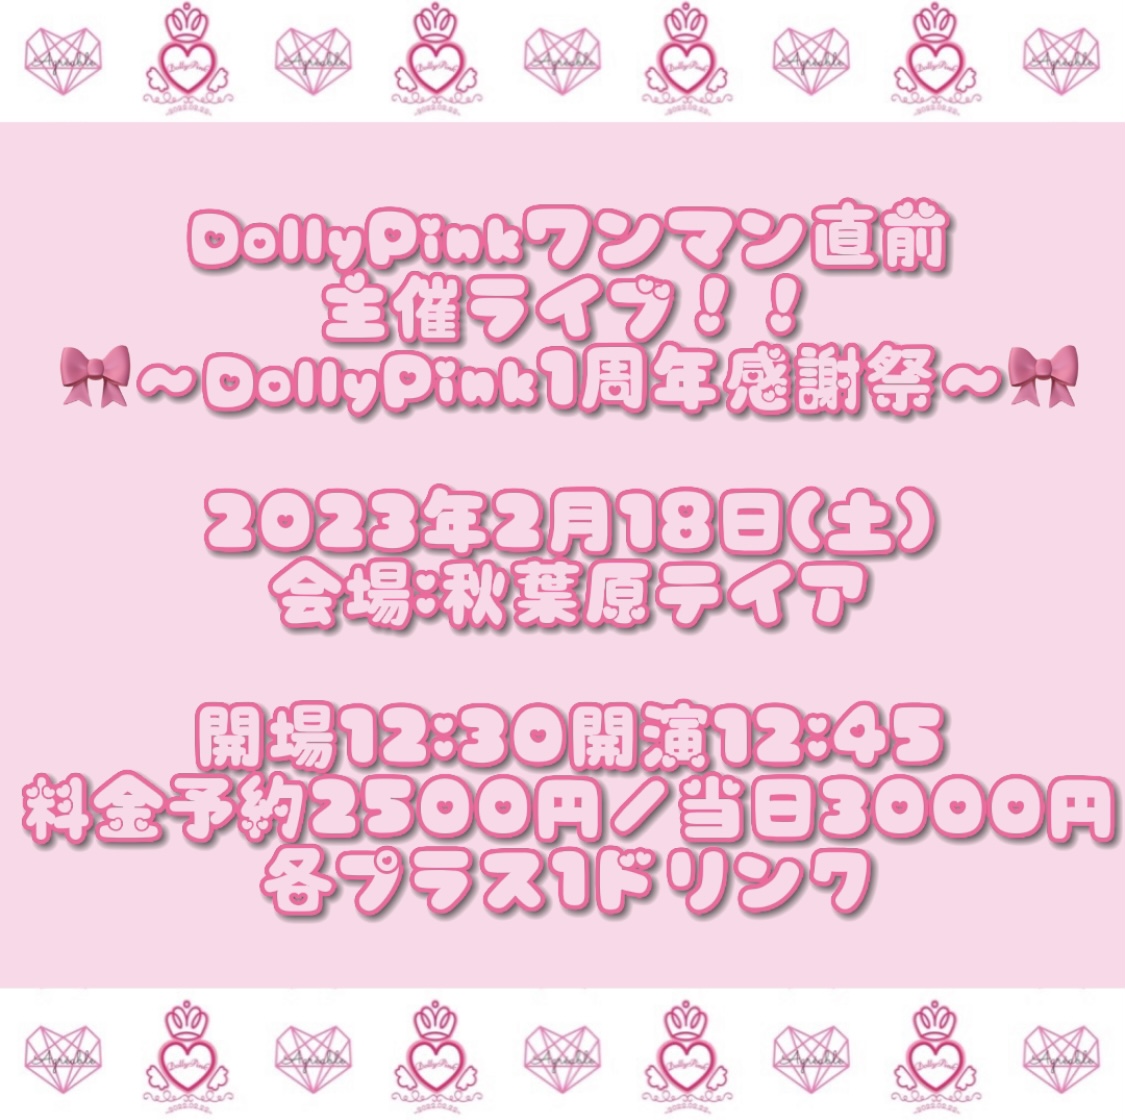 DollyPinkワンマン直前主催ライブ！！〜DollyPink1周年感謝祭〜